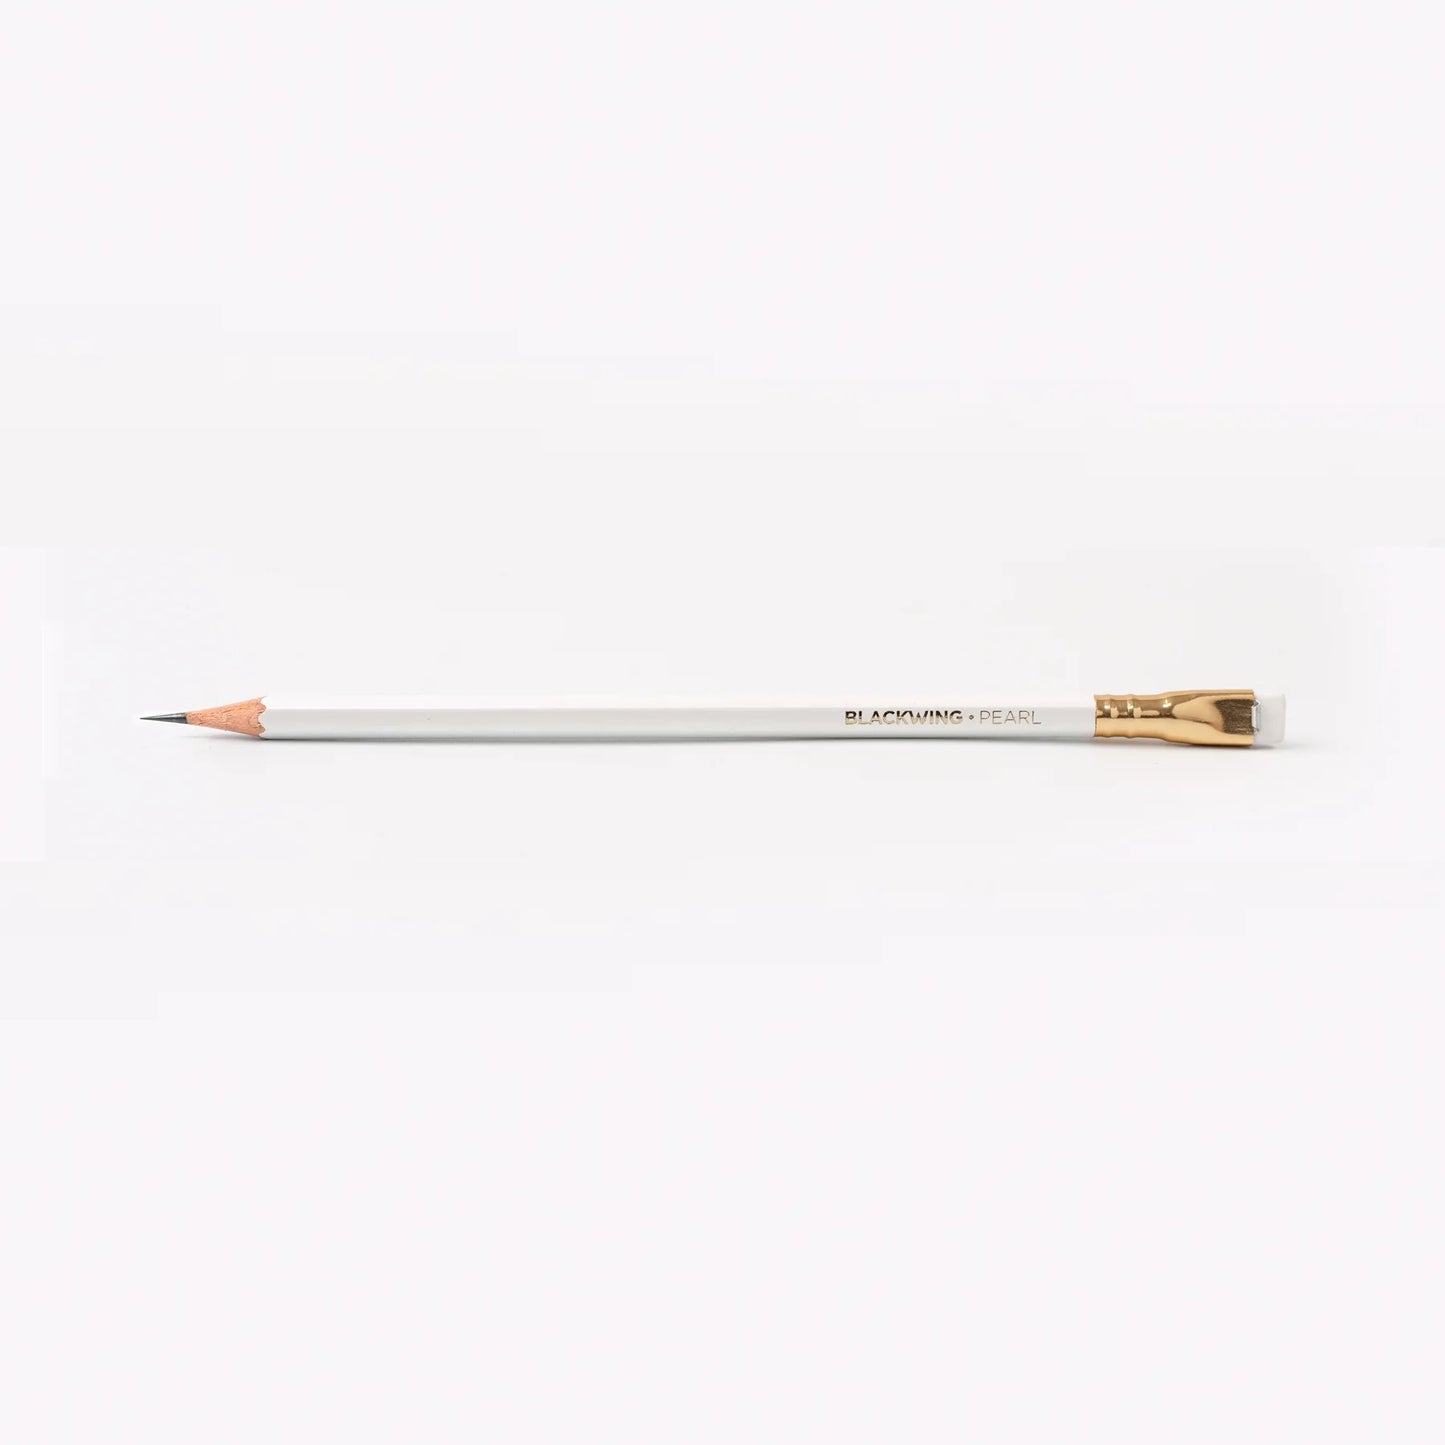 Blackwing Pencils Set of 12